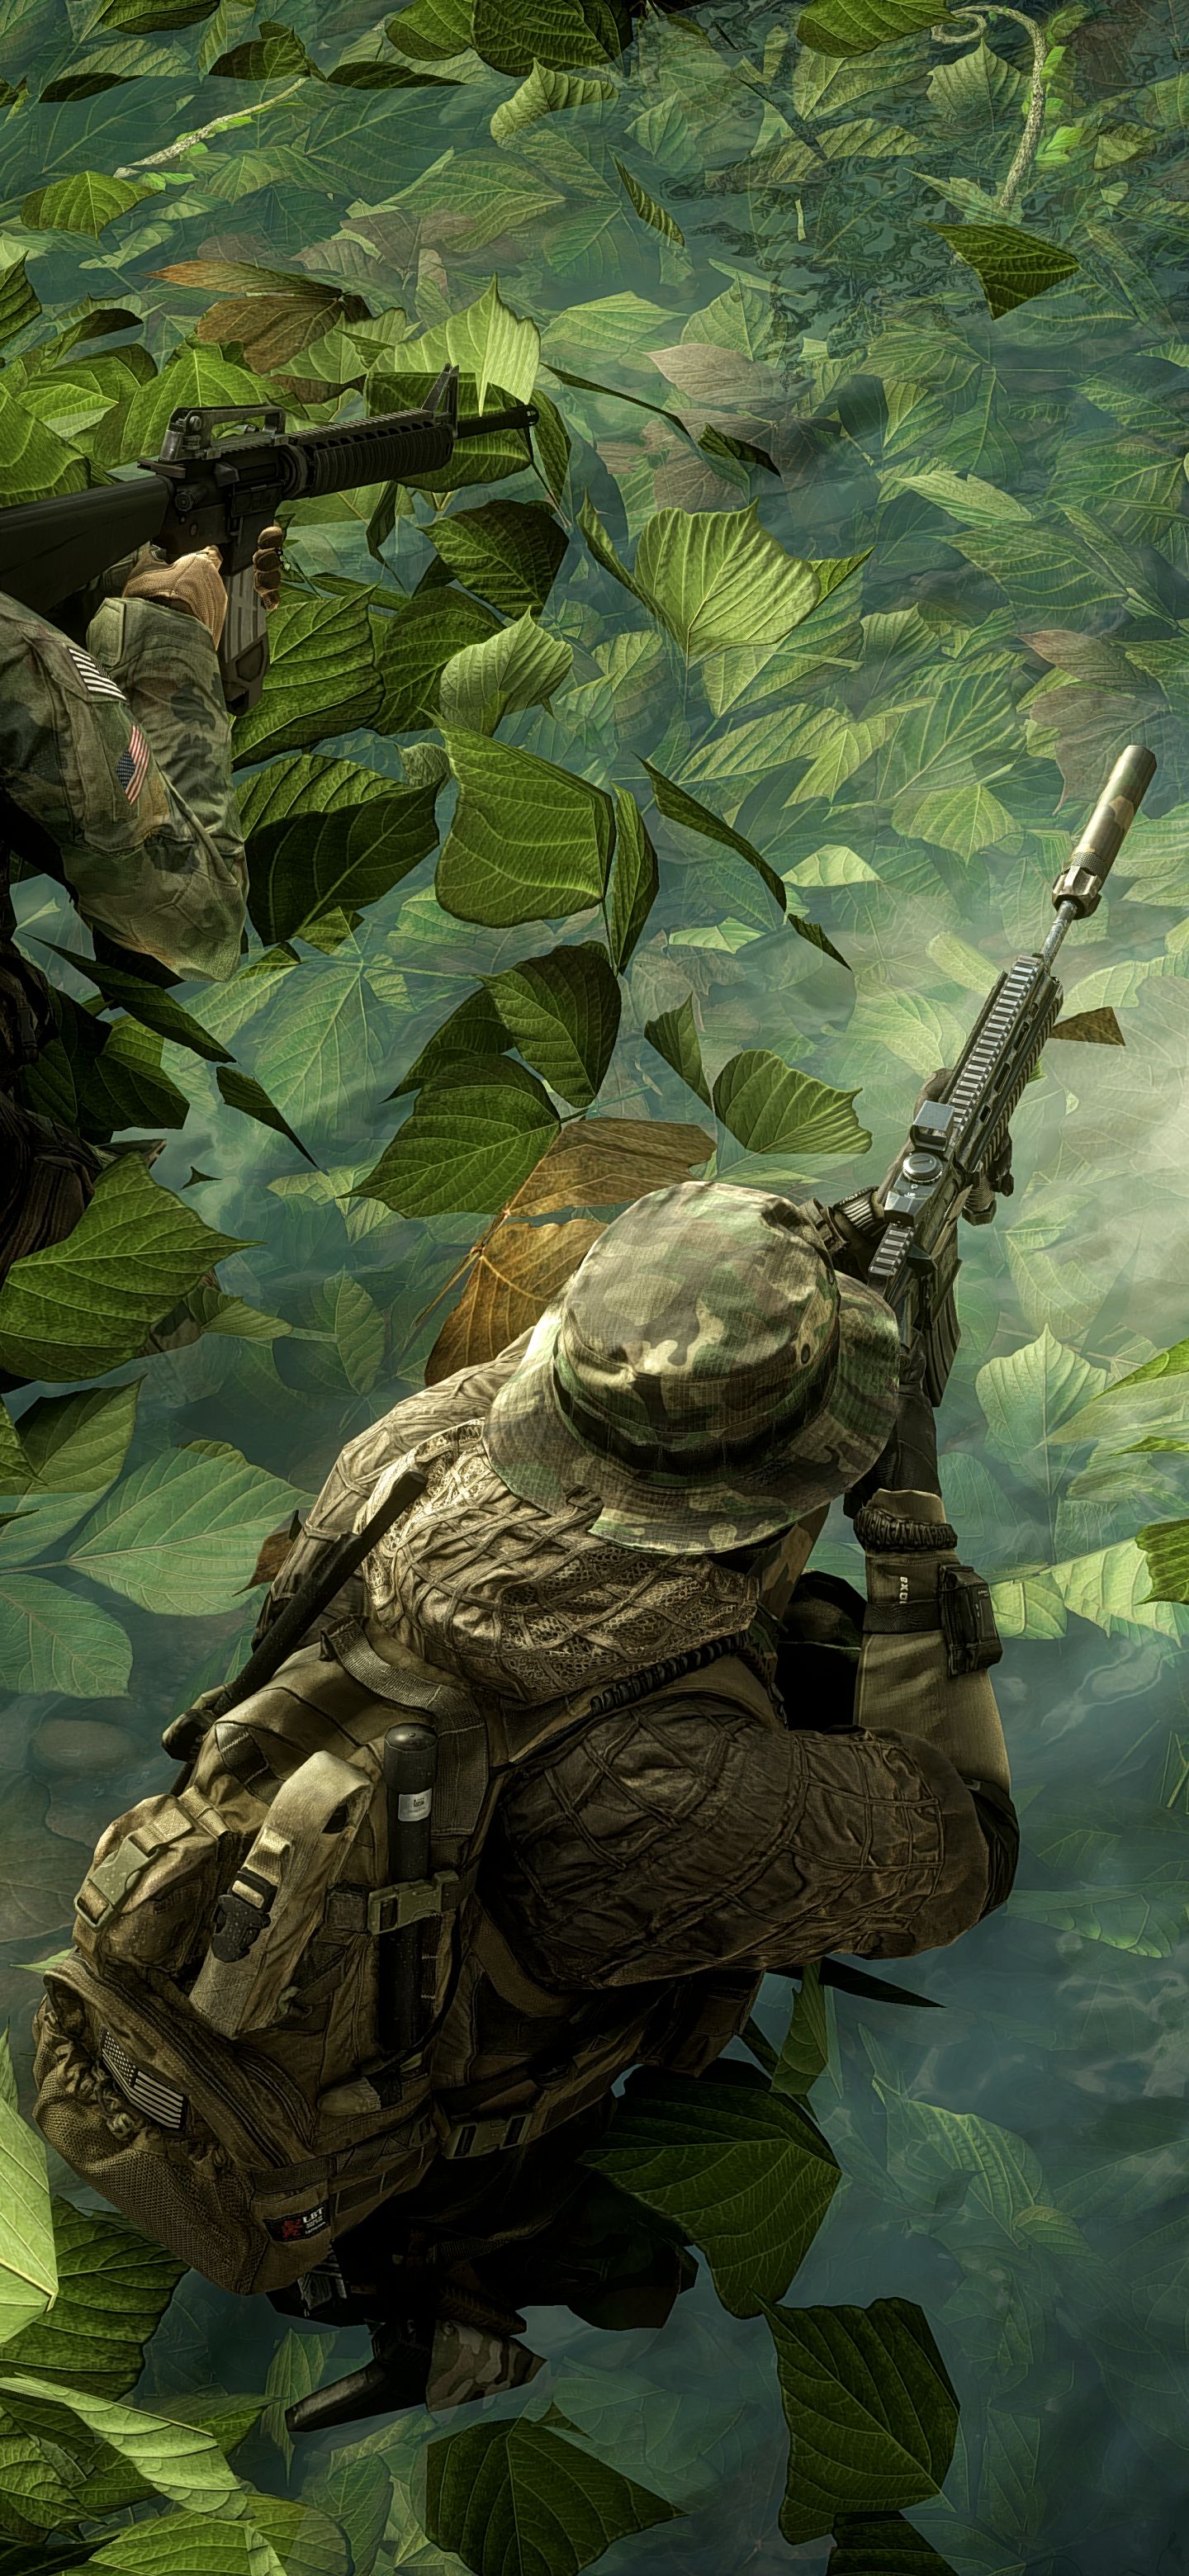 Free download wallpaper Battlefield, Video Game, Battlefield 4 on your PC desktop